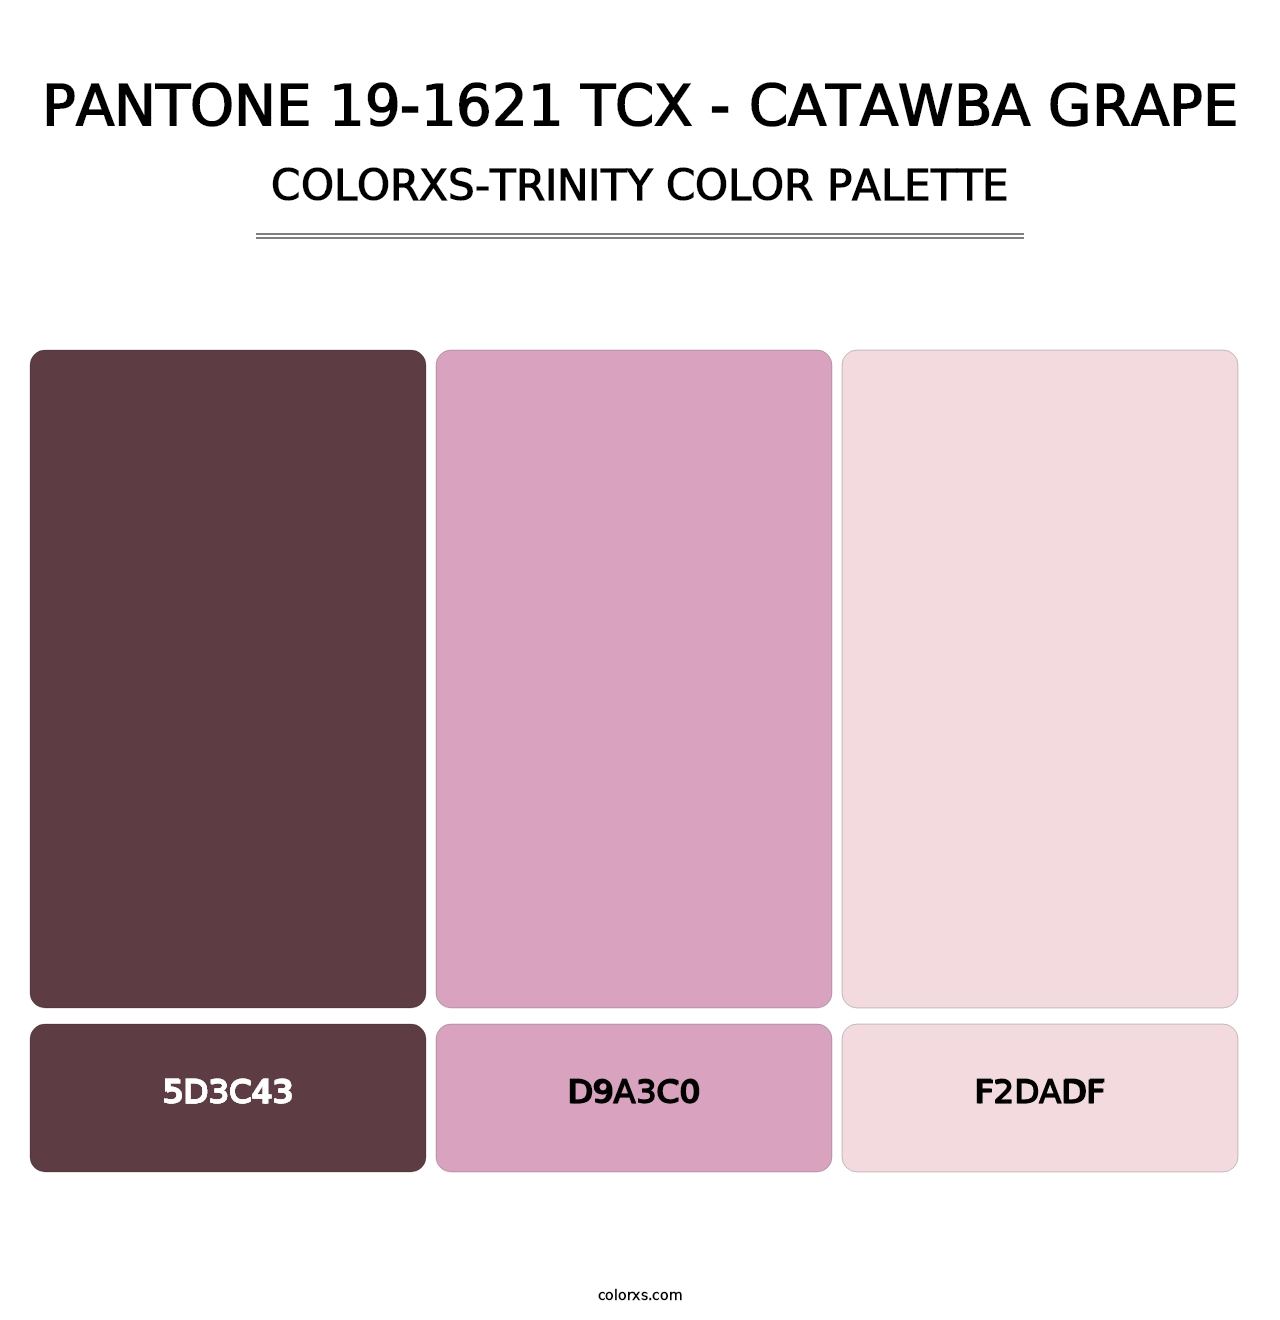 PANTONE 19-1621 TCX - Catawba Grape - Colorxs Trinity Palette